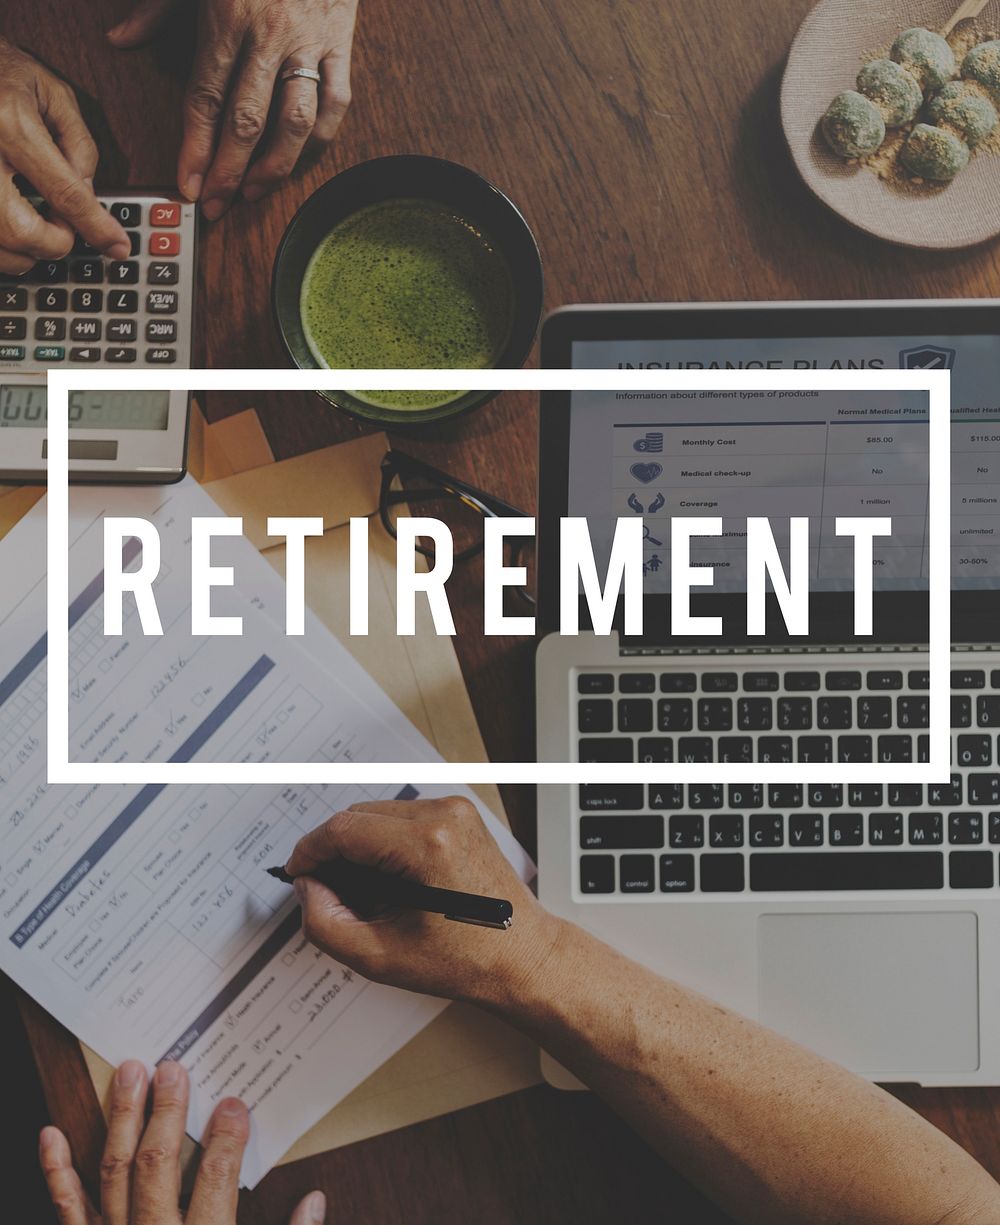 Retirenment Plan Senior Adult Concept